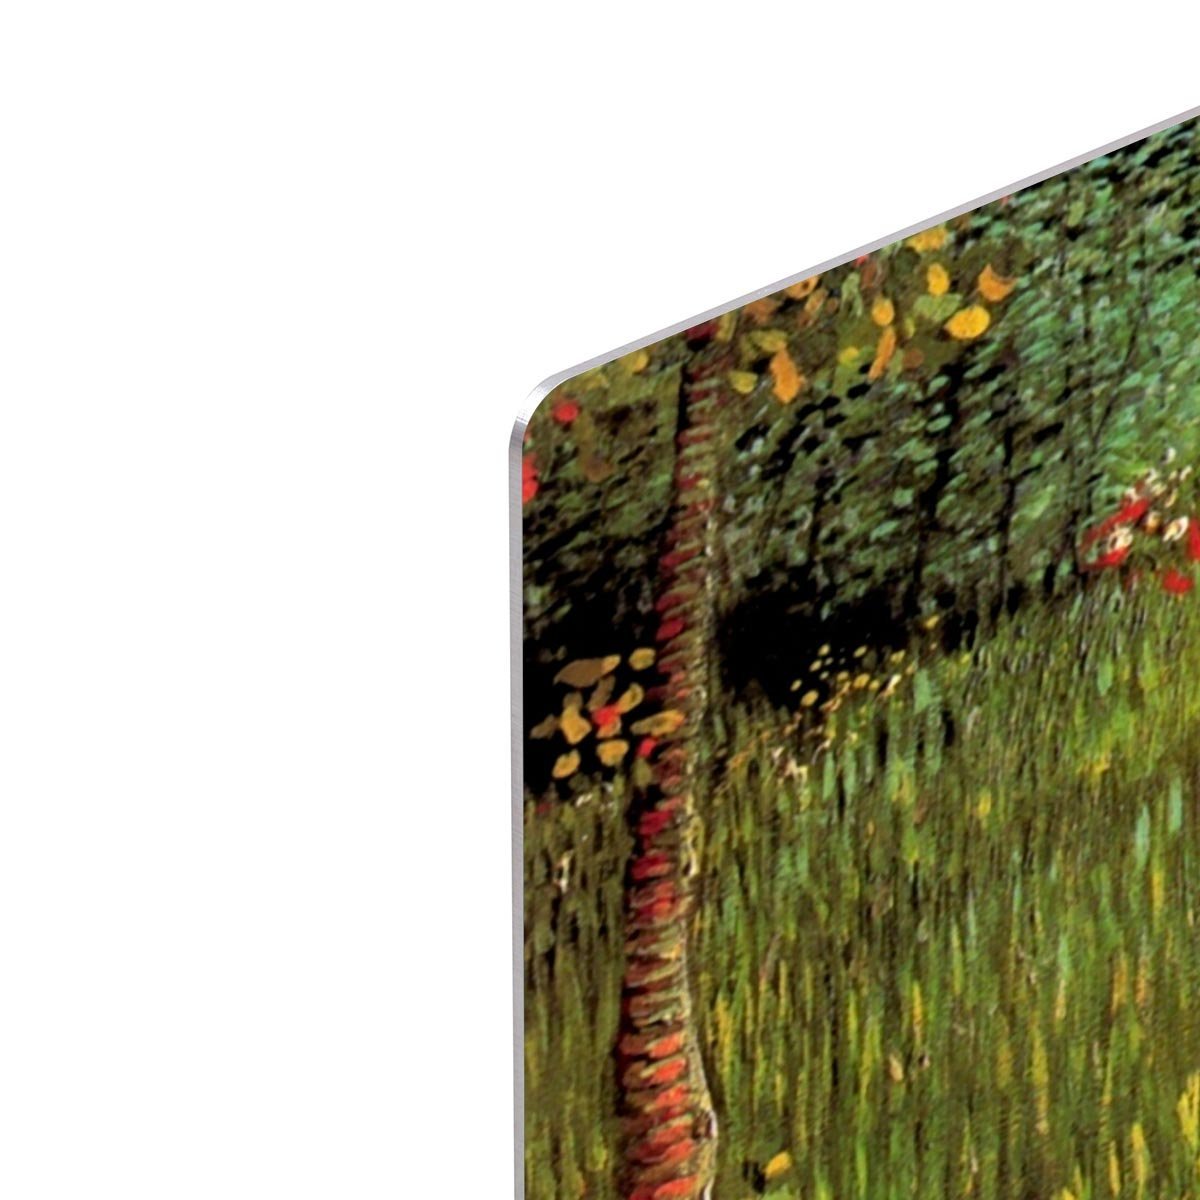 A Woman Walking in a Garden by Van Gogh HD Metal Print